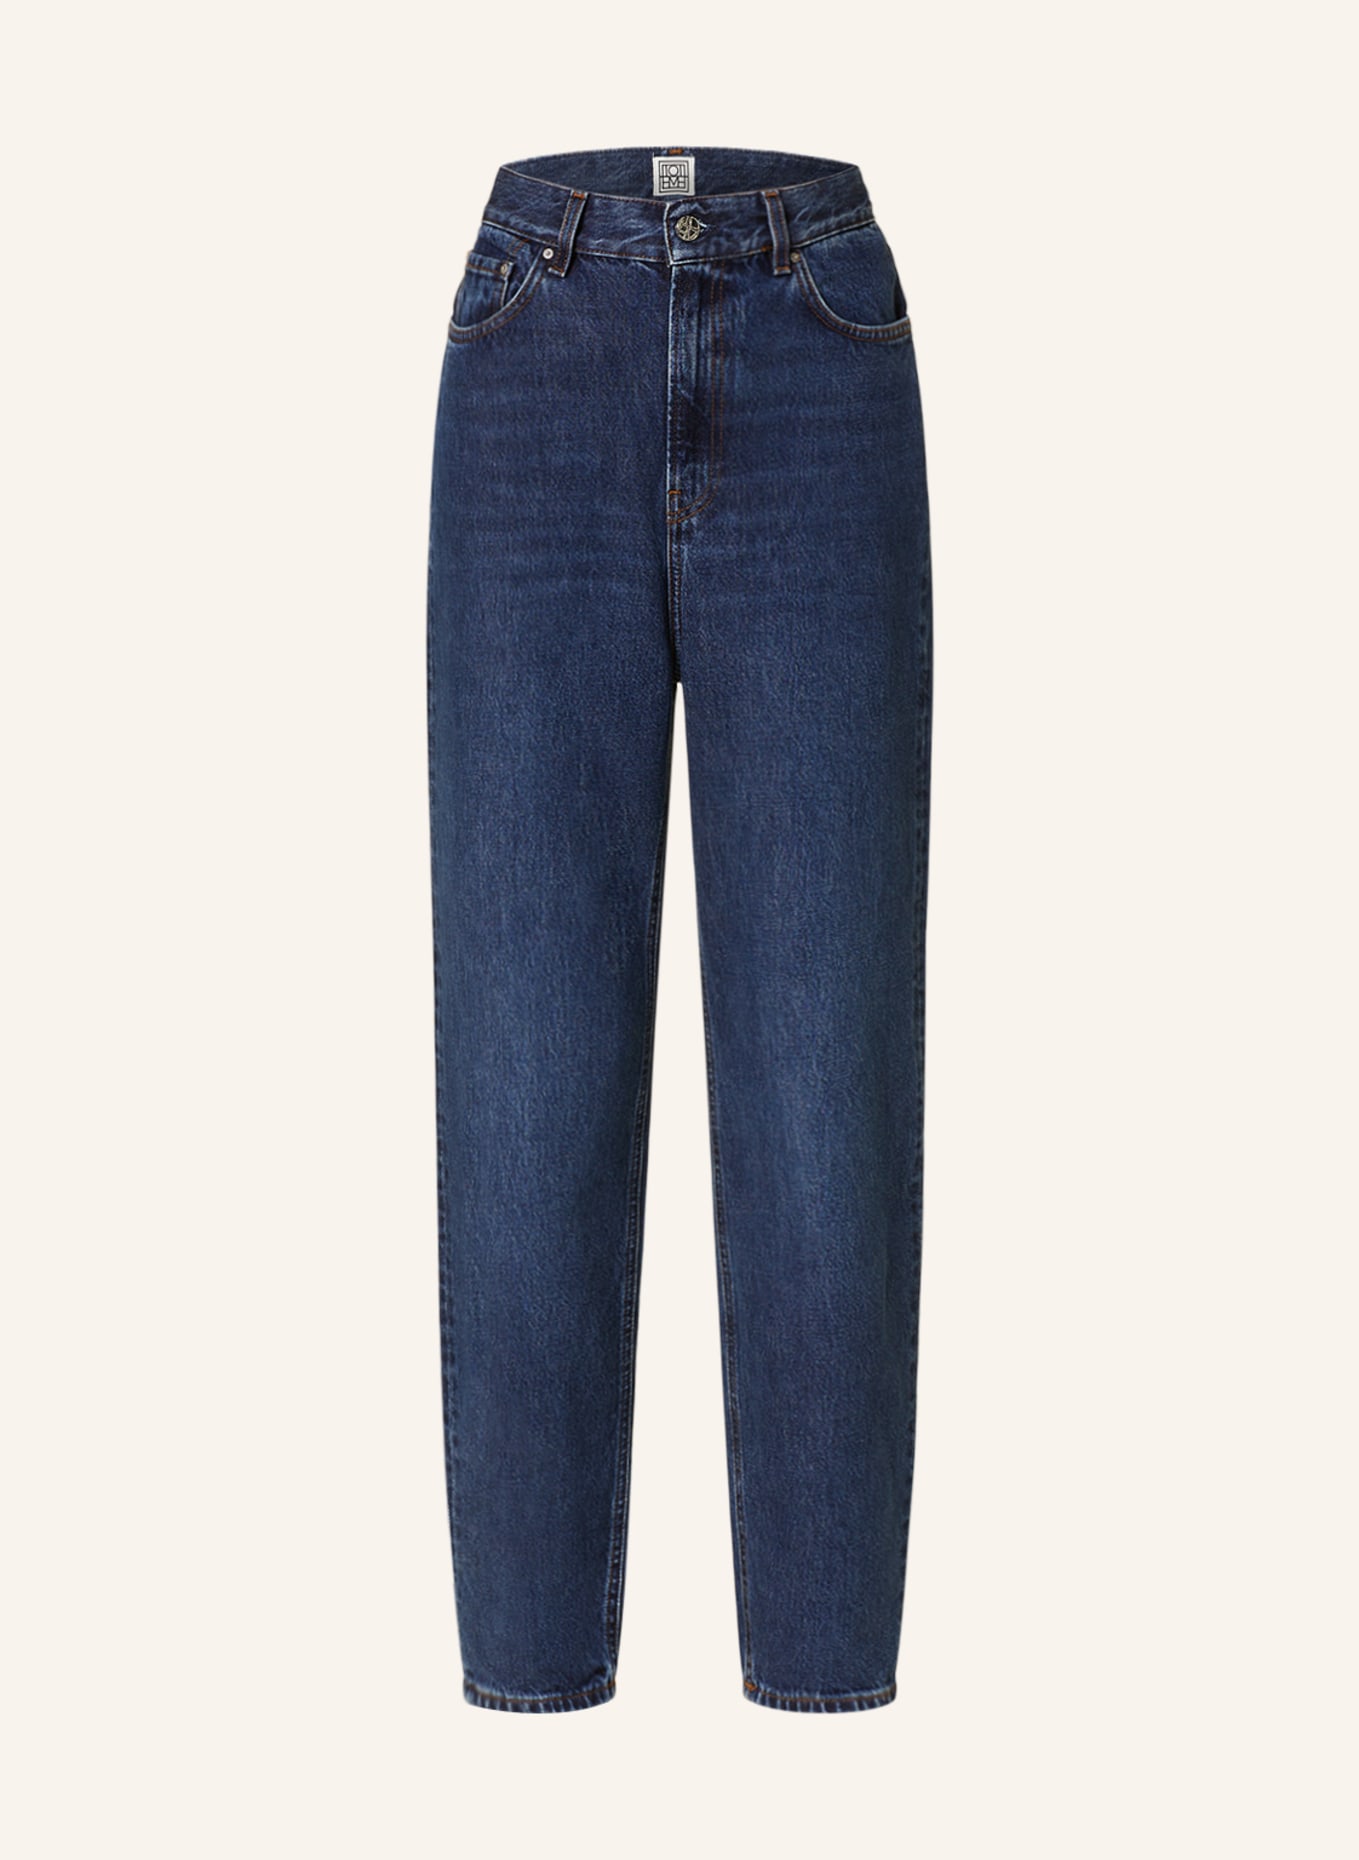 TOTEME Jeans, Farbe: 404 DARK BLUE (Bild 1)